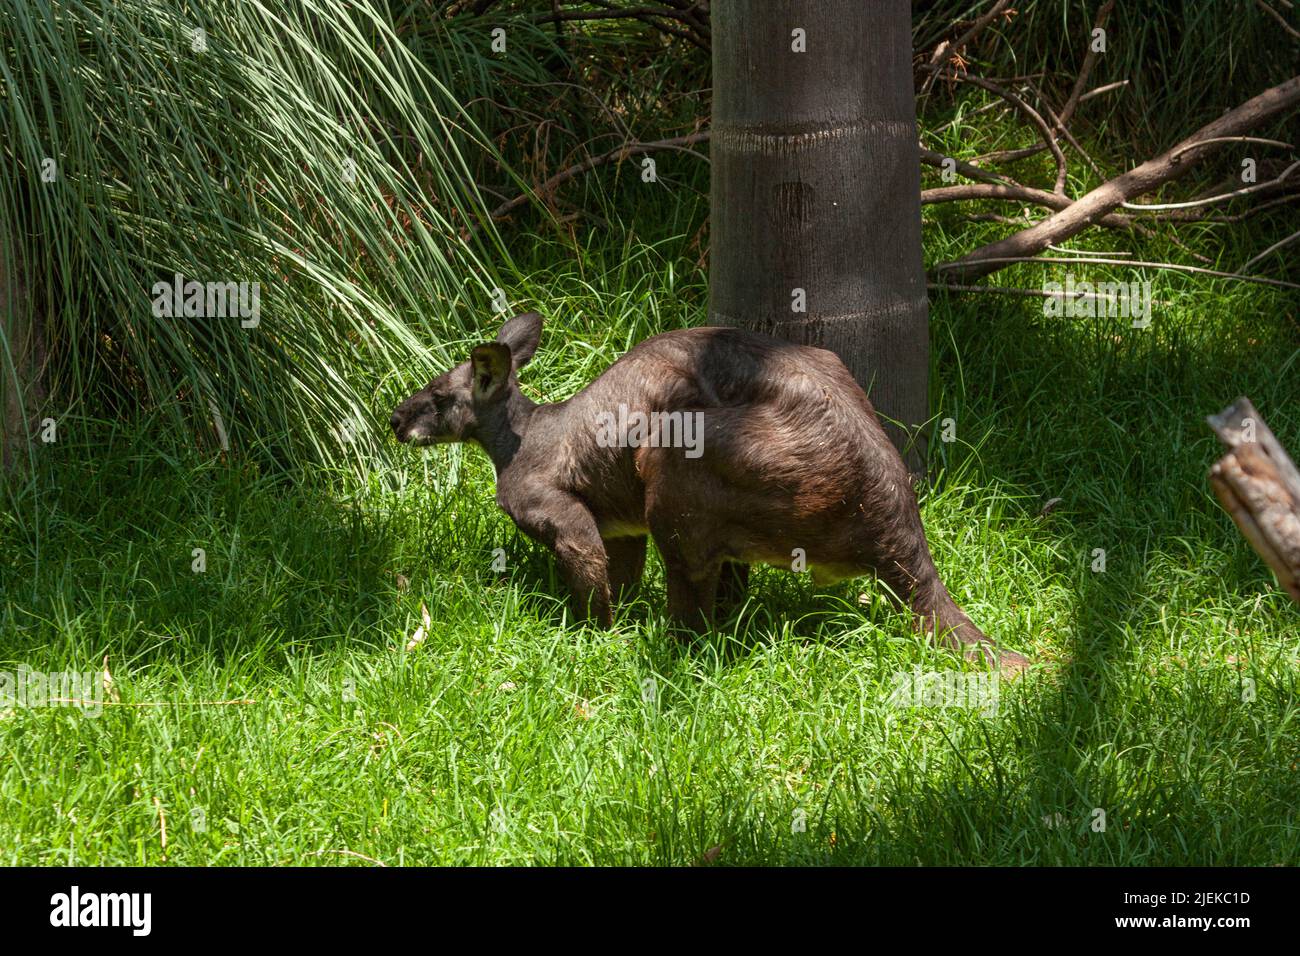 Red kangaroo: scientific name Macropus Rufus in wild life inhabits Australia is a herbivorous mammal standing among the grass Stock Photo